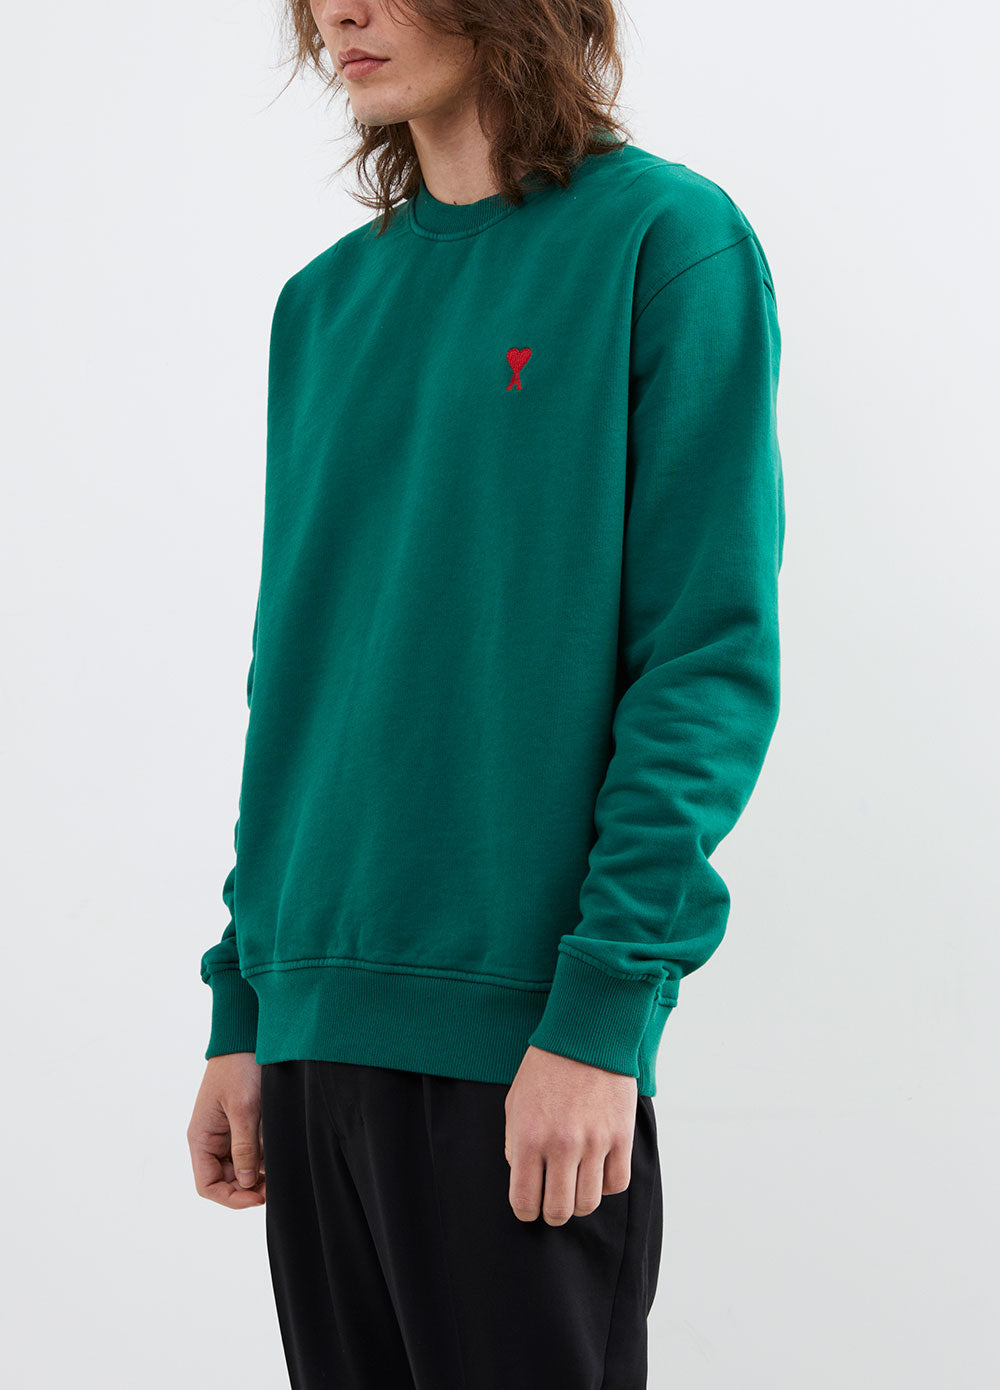 Men's Green Classic Sweatshirt by AMI PARIS | Incu